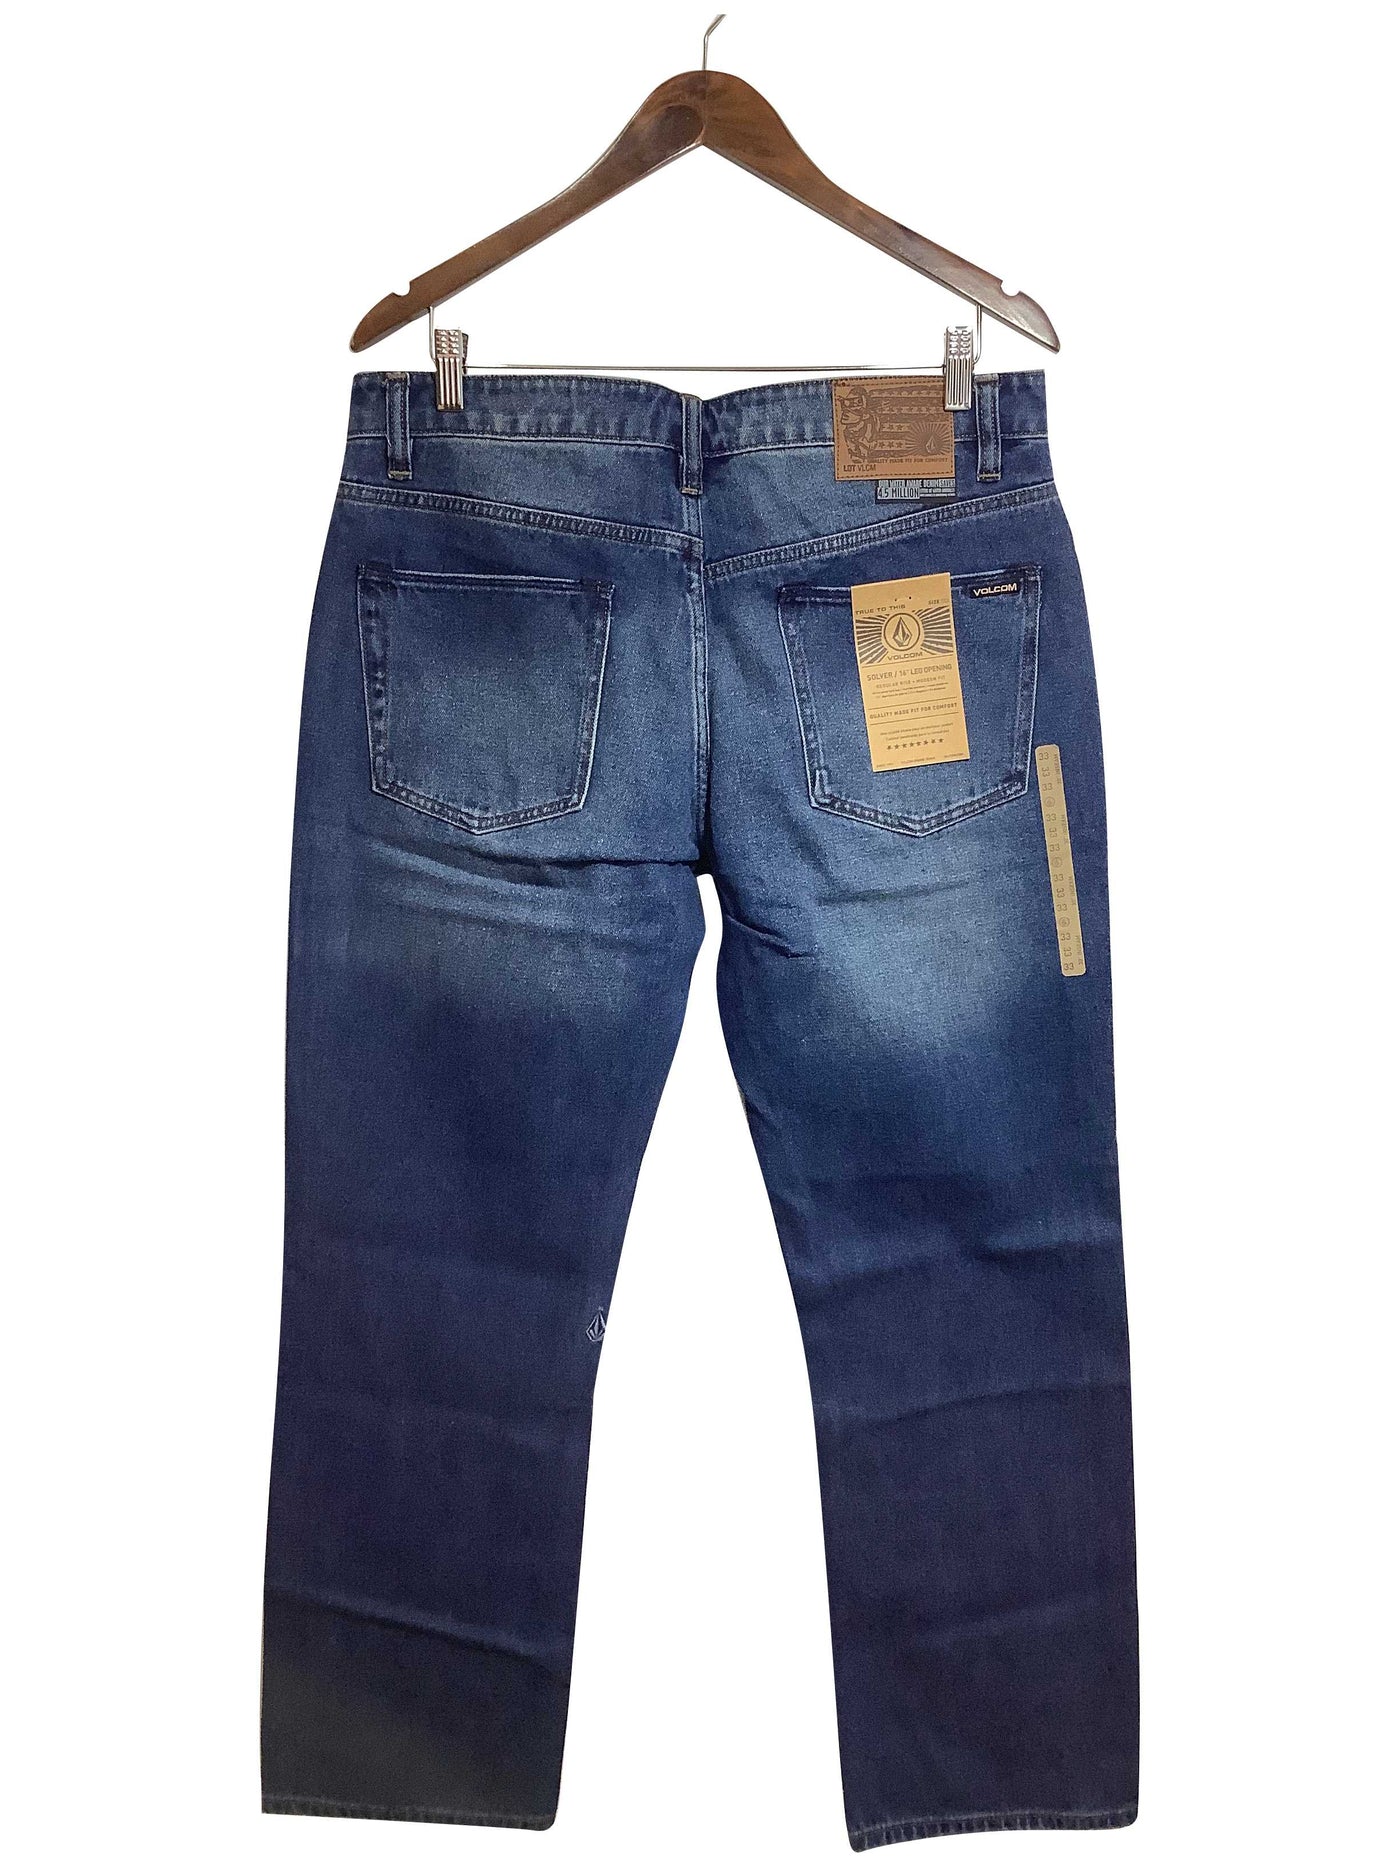 VOLCOM Regular fit Straight-legged Jeans in Blue - Size 33x30 | 27 $ KOOP